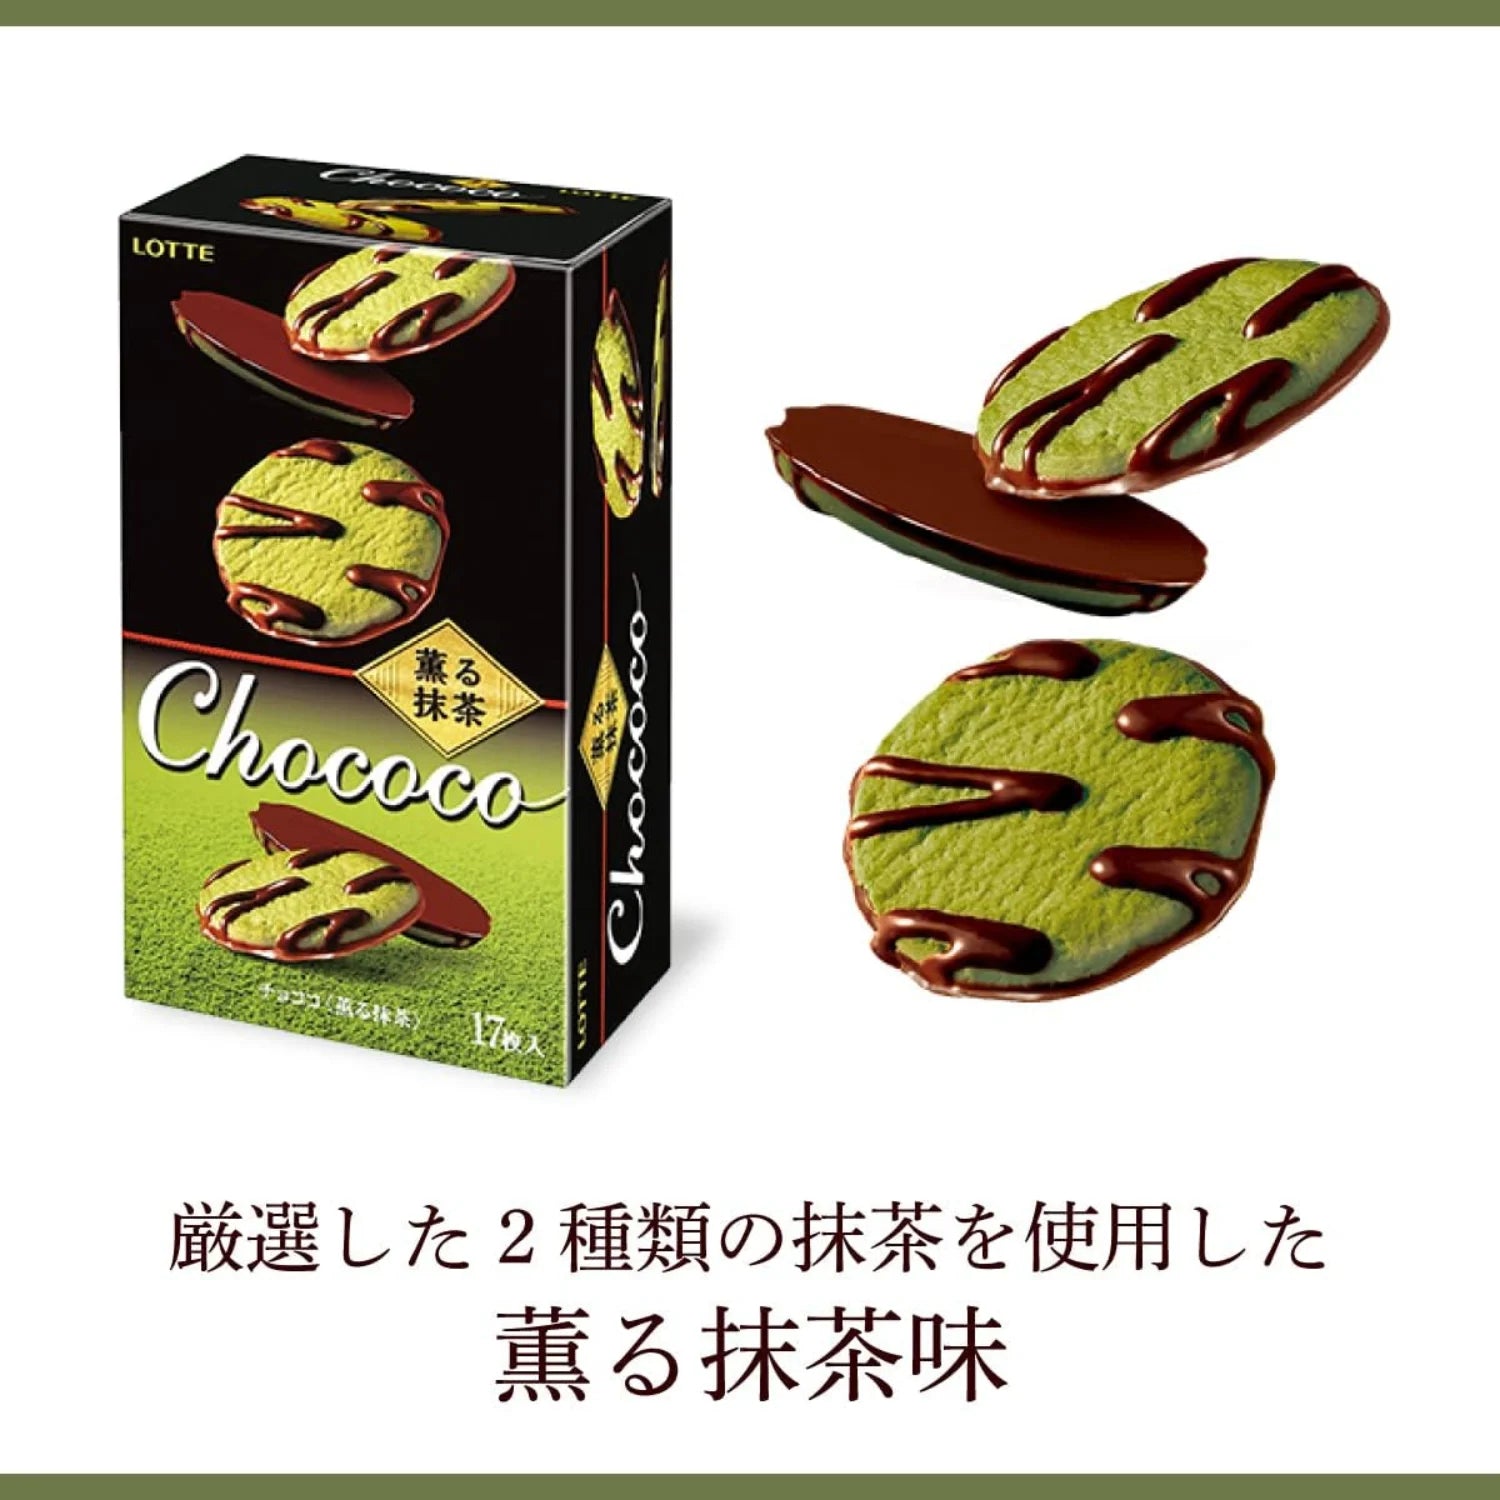 Lotte Chococo Matcha Chocolate Cookies (17 Units) - Buy Me Japan